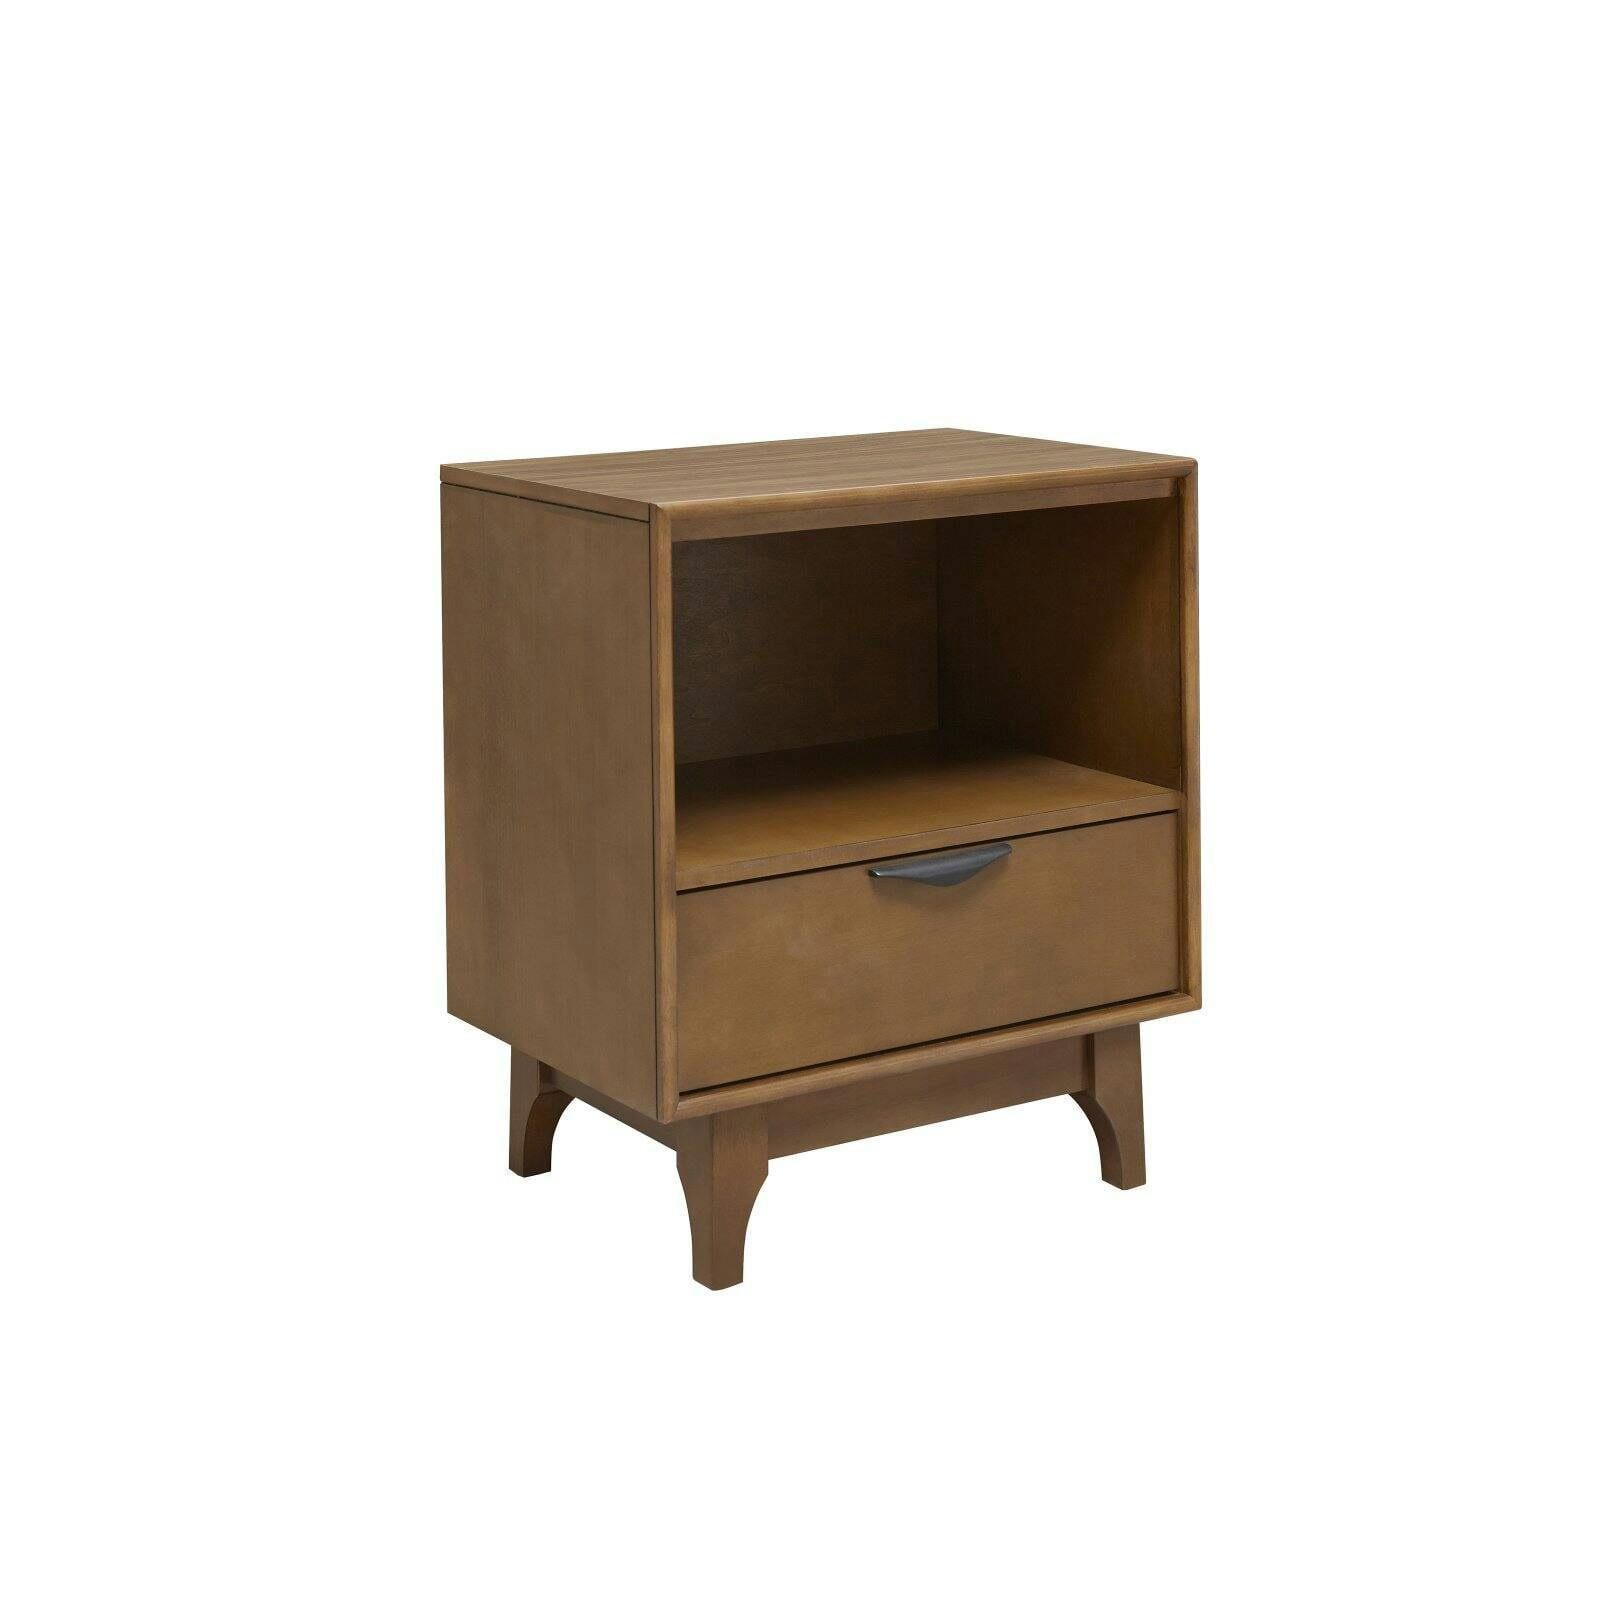 Progressive Furniture Mid-Mod 1 Drawer Nightstand